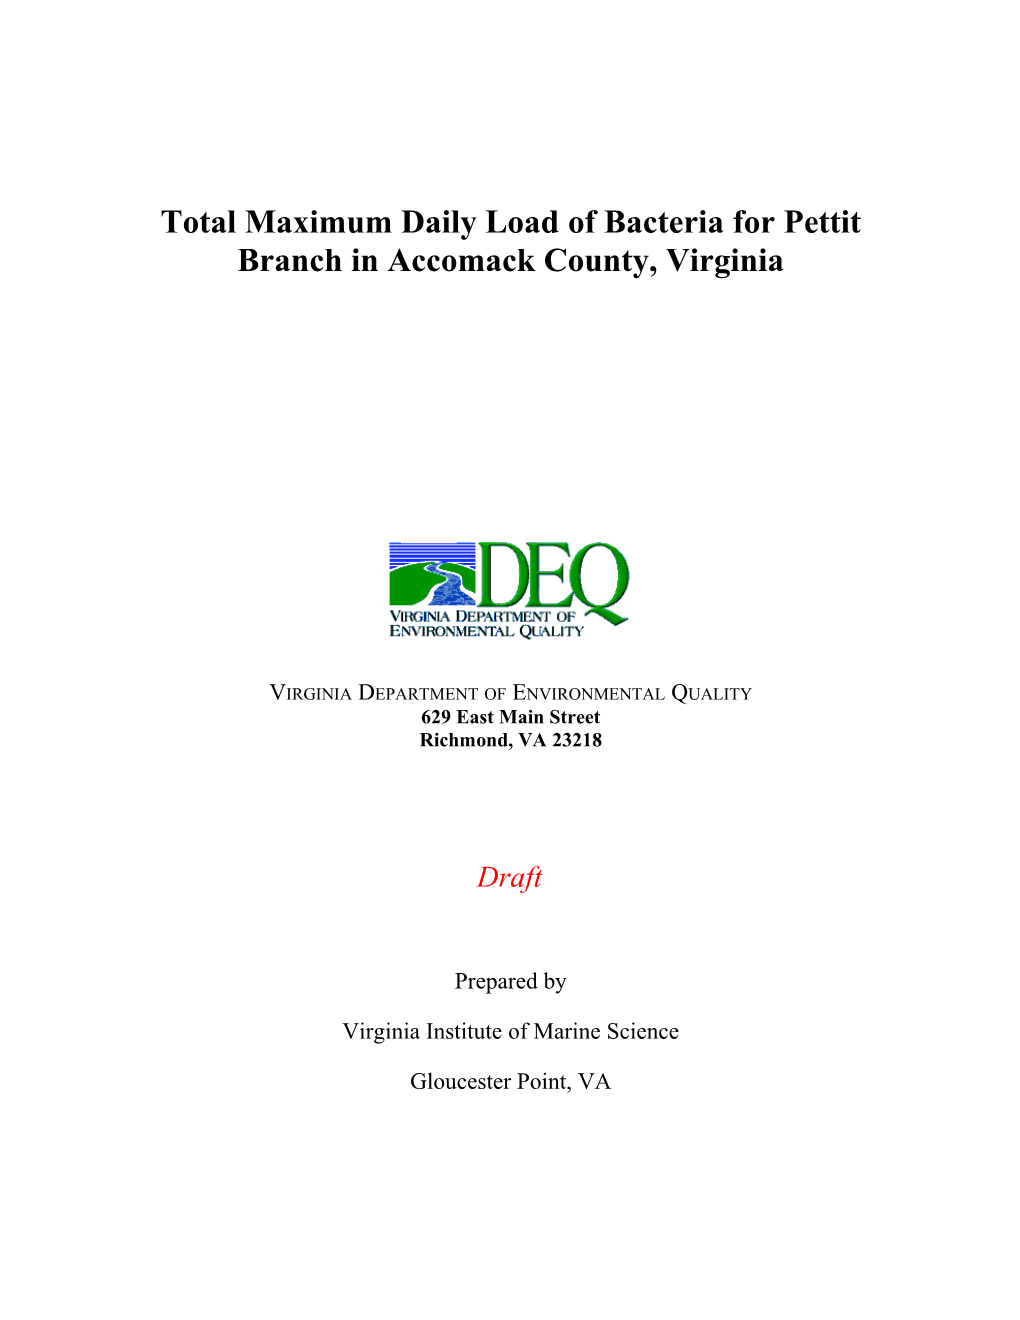 Fecal Coliform Total Maximum Daily Load Development for Pettit Branch, Virginia